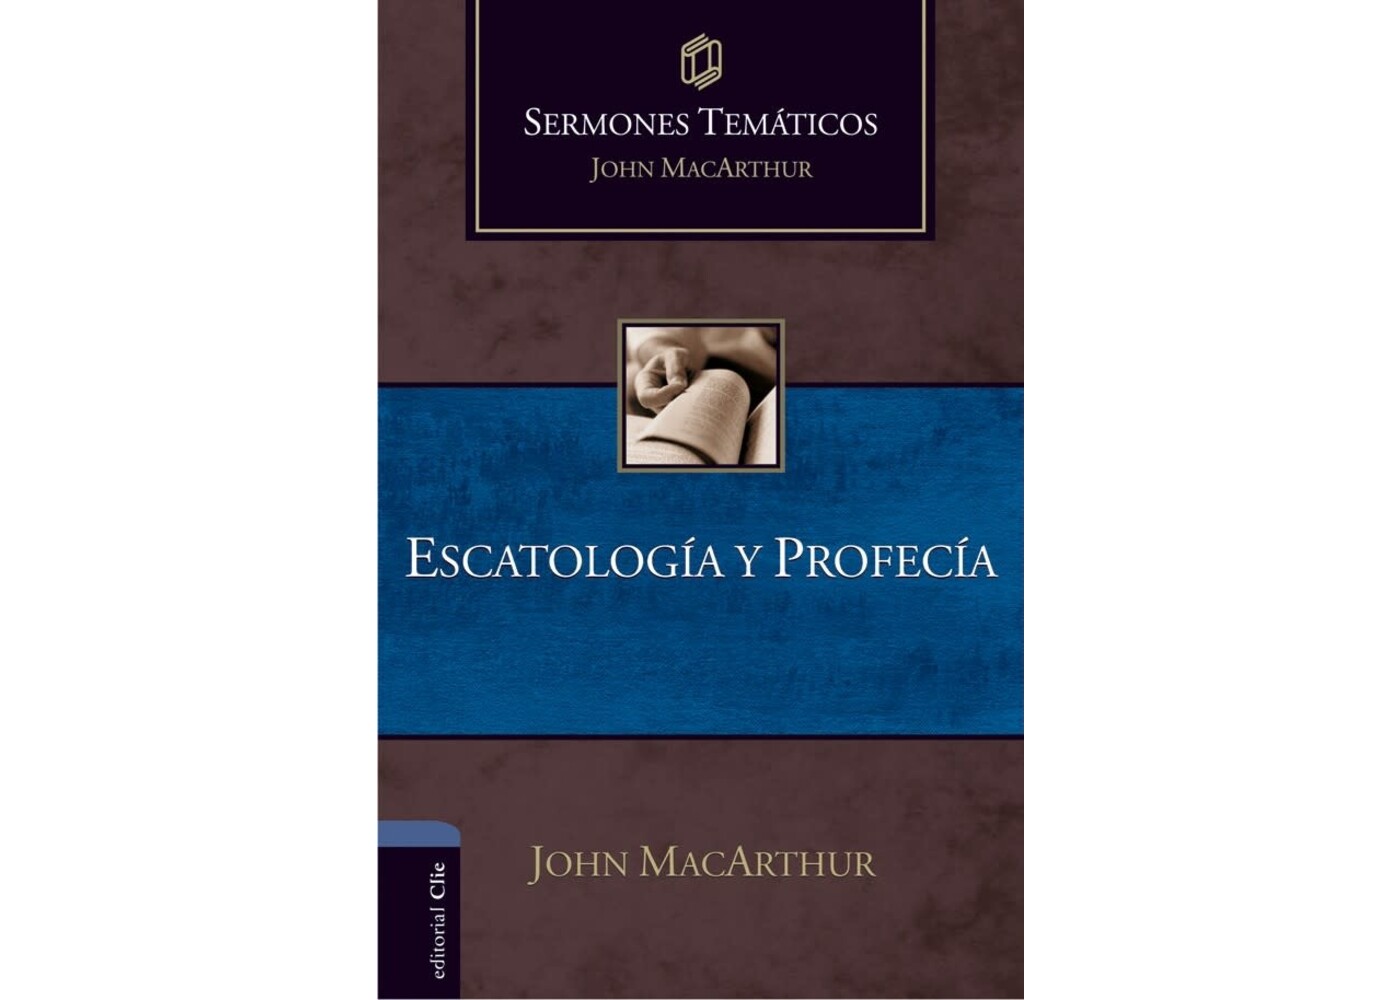 EDITORIAL CLIE SERMONES TEMATICOS JOHN MACARTHUR ESCATOLOGIA Y PROFECIA